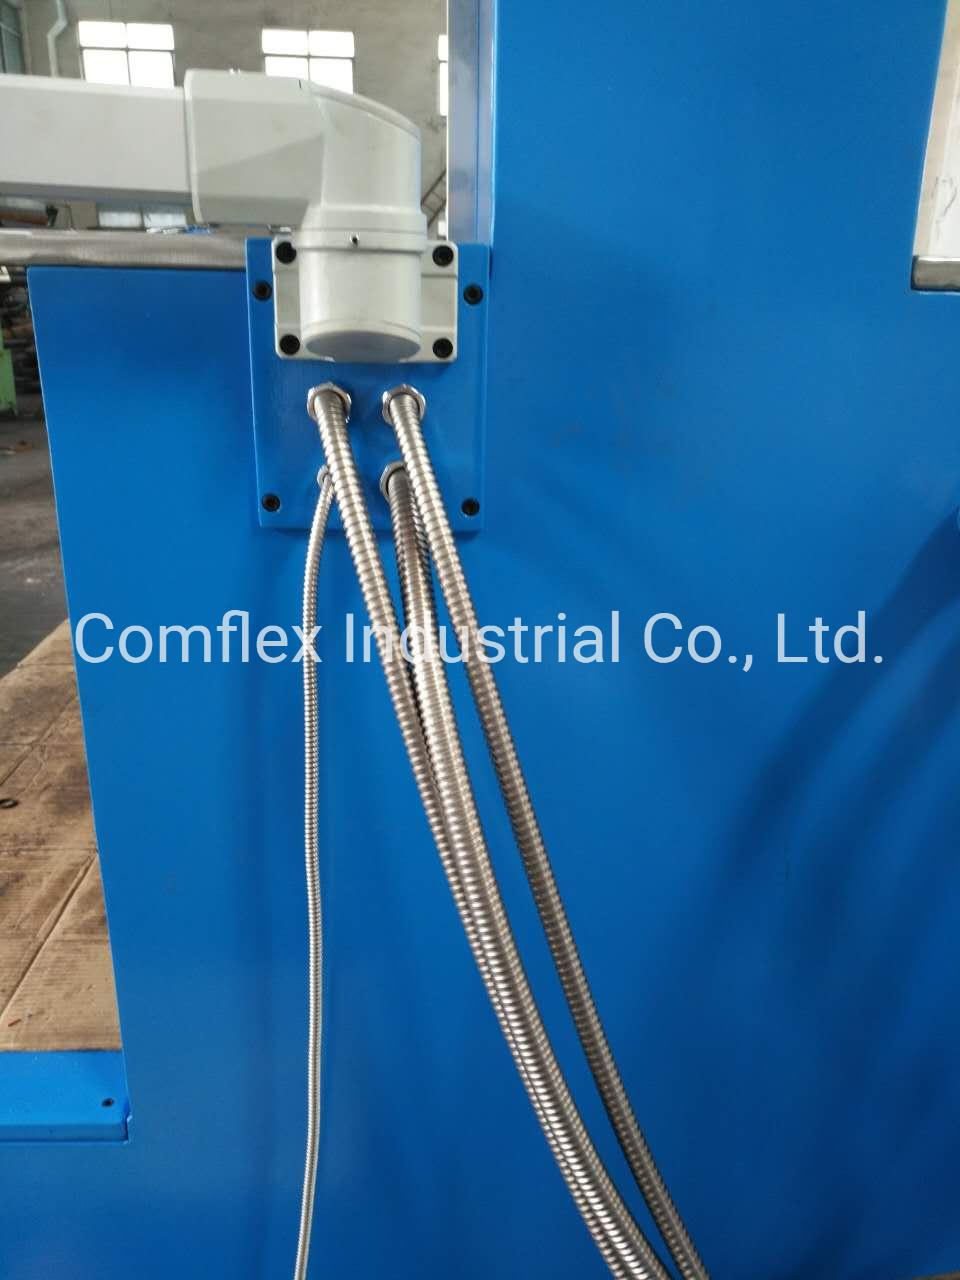 Stainless Steel Interlock Conduit for Instrument